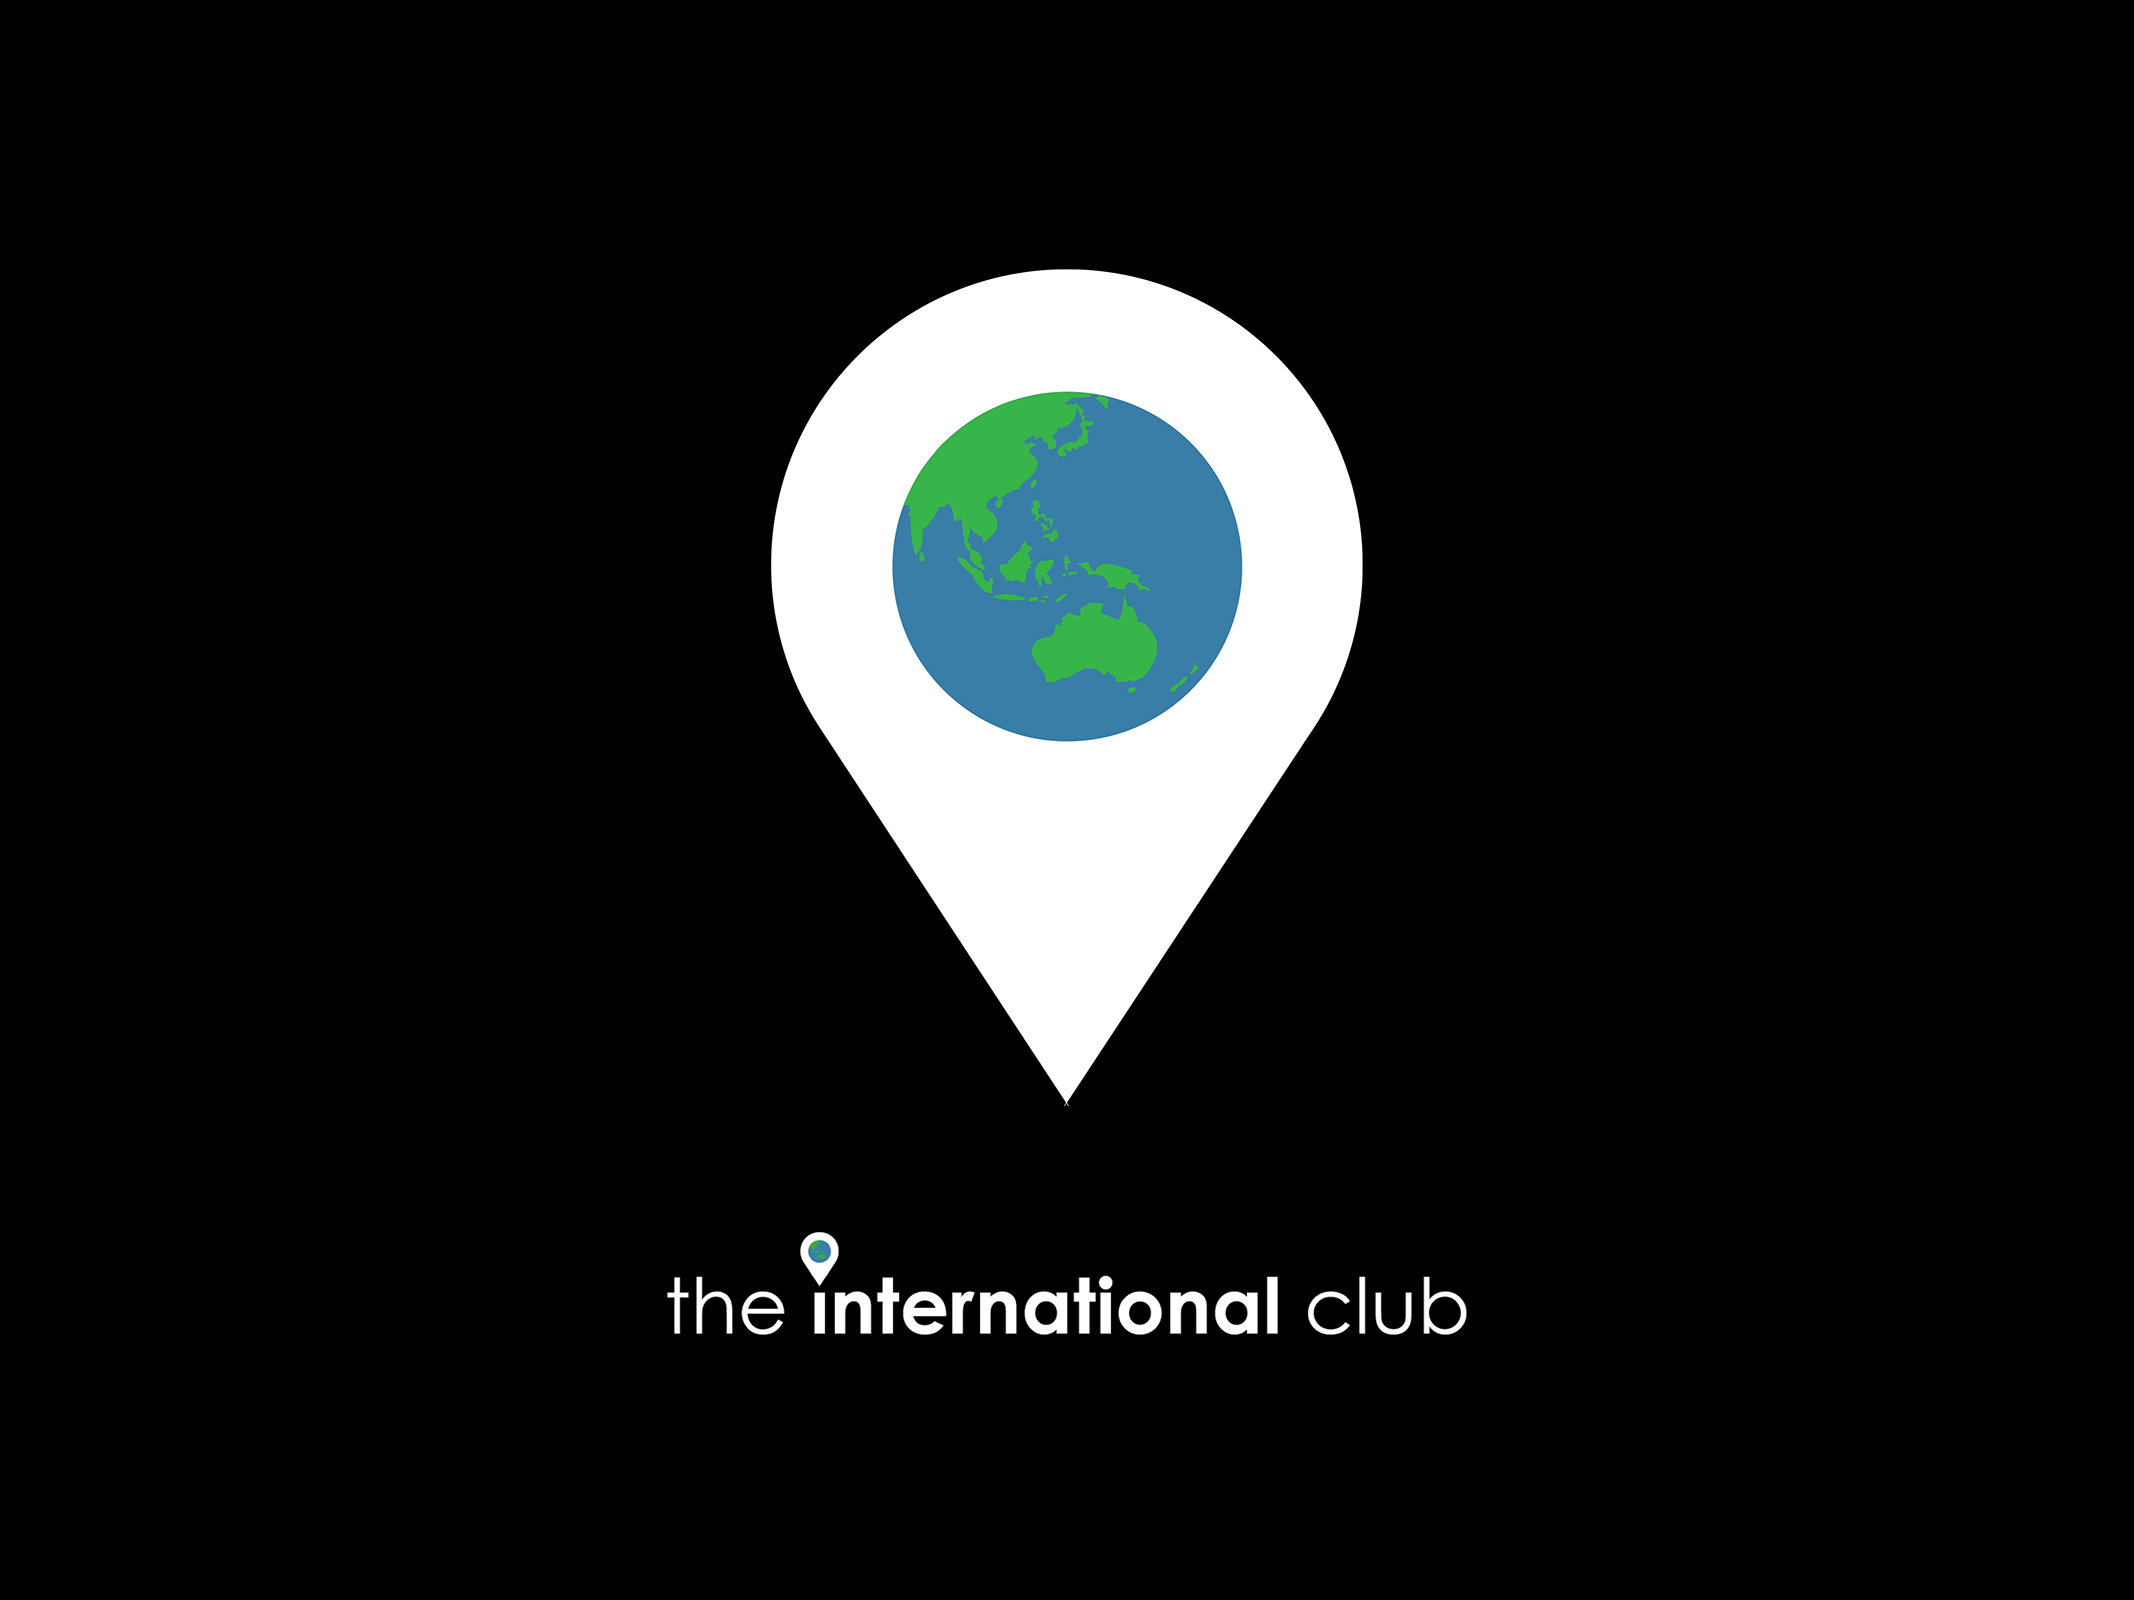 The International Club